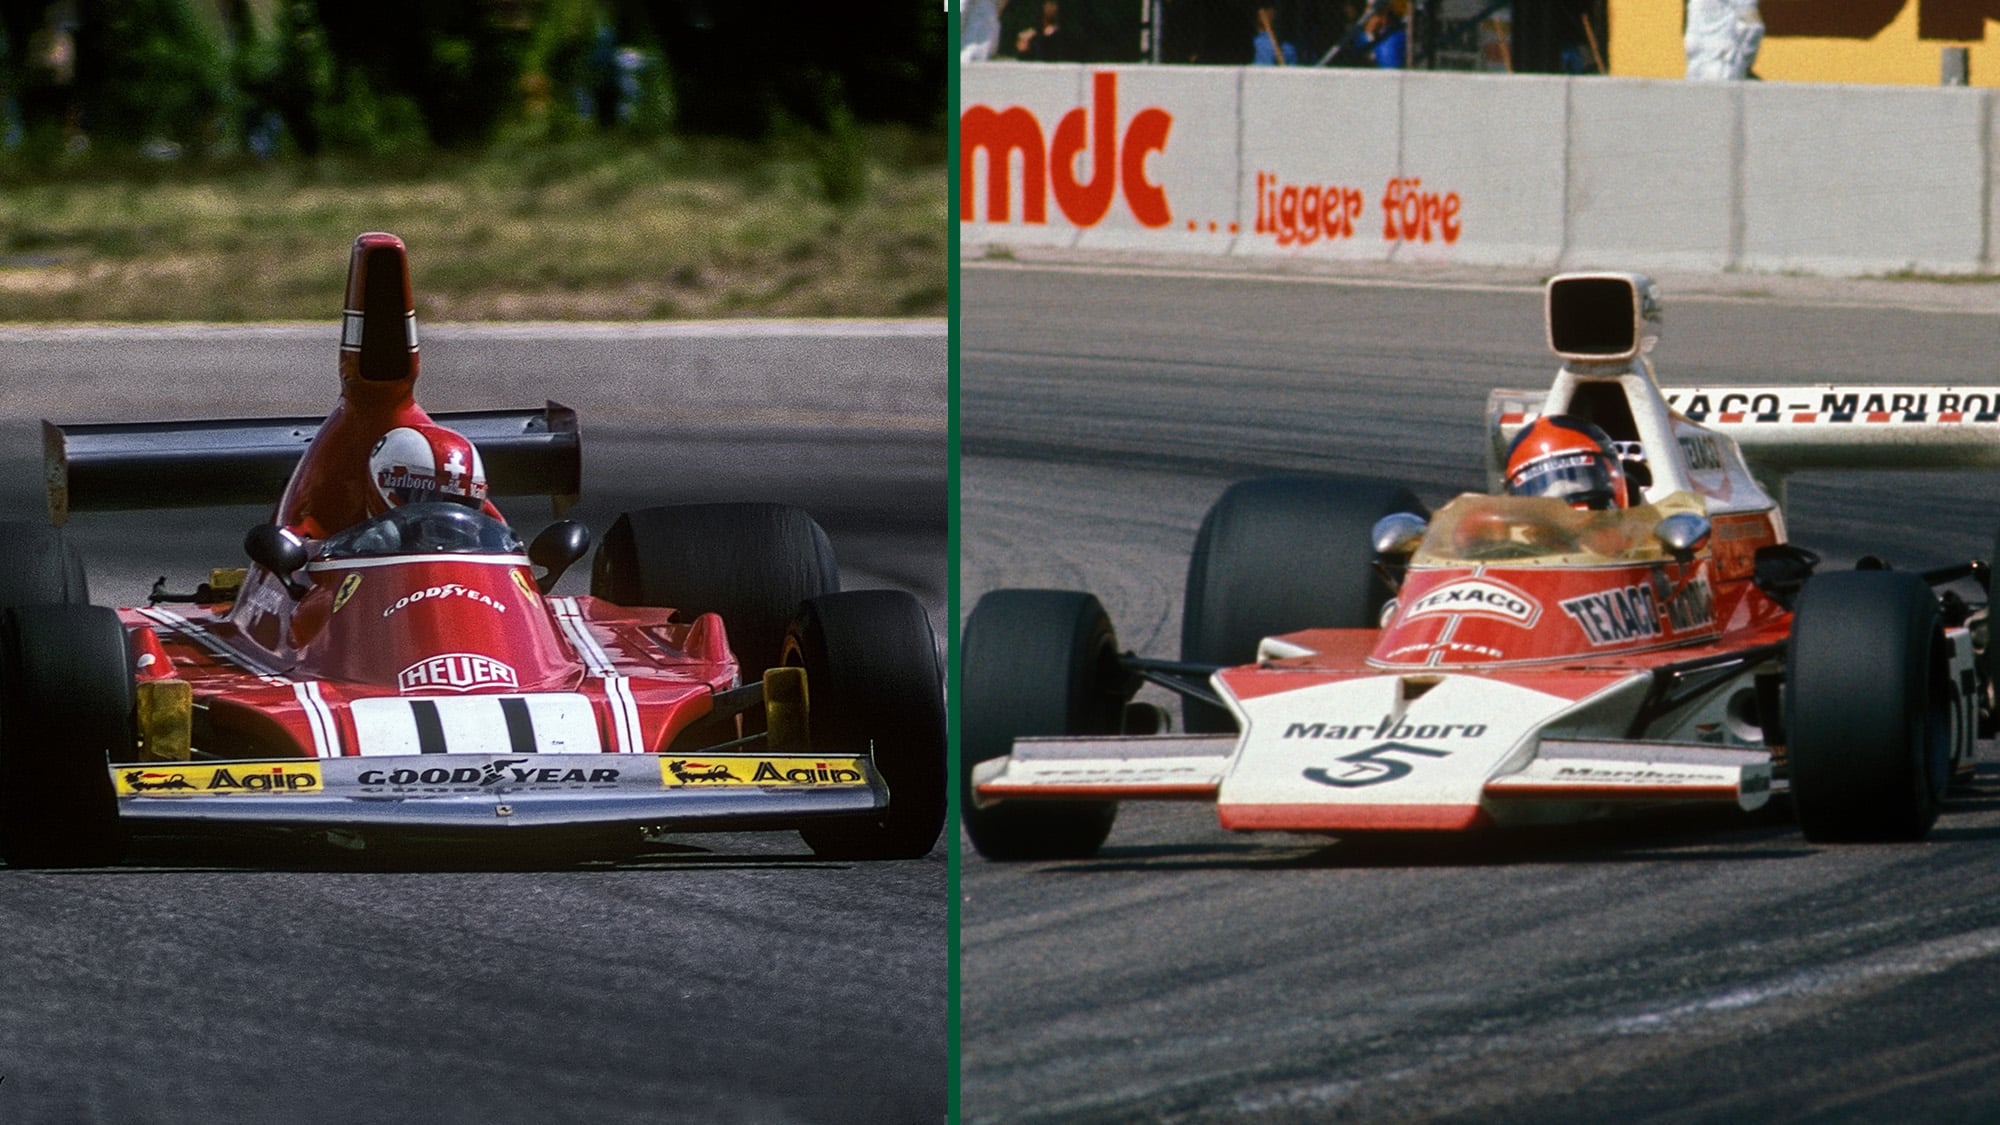 Carlos-Reutemann-and-Emerson-Fittipaldi-in-1974.jpg